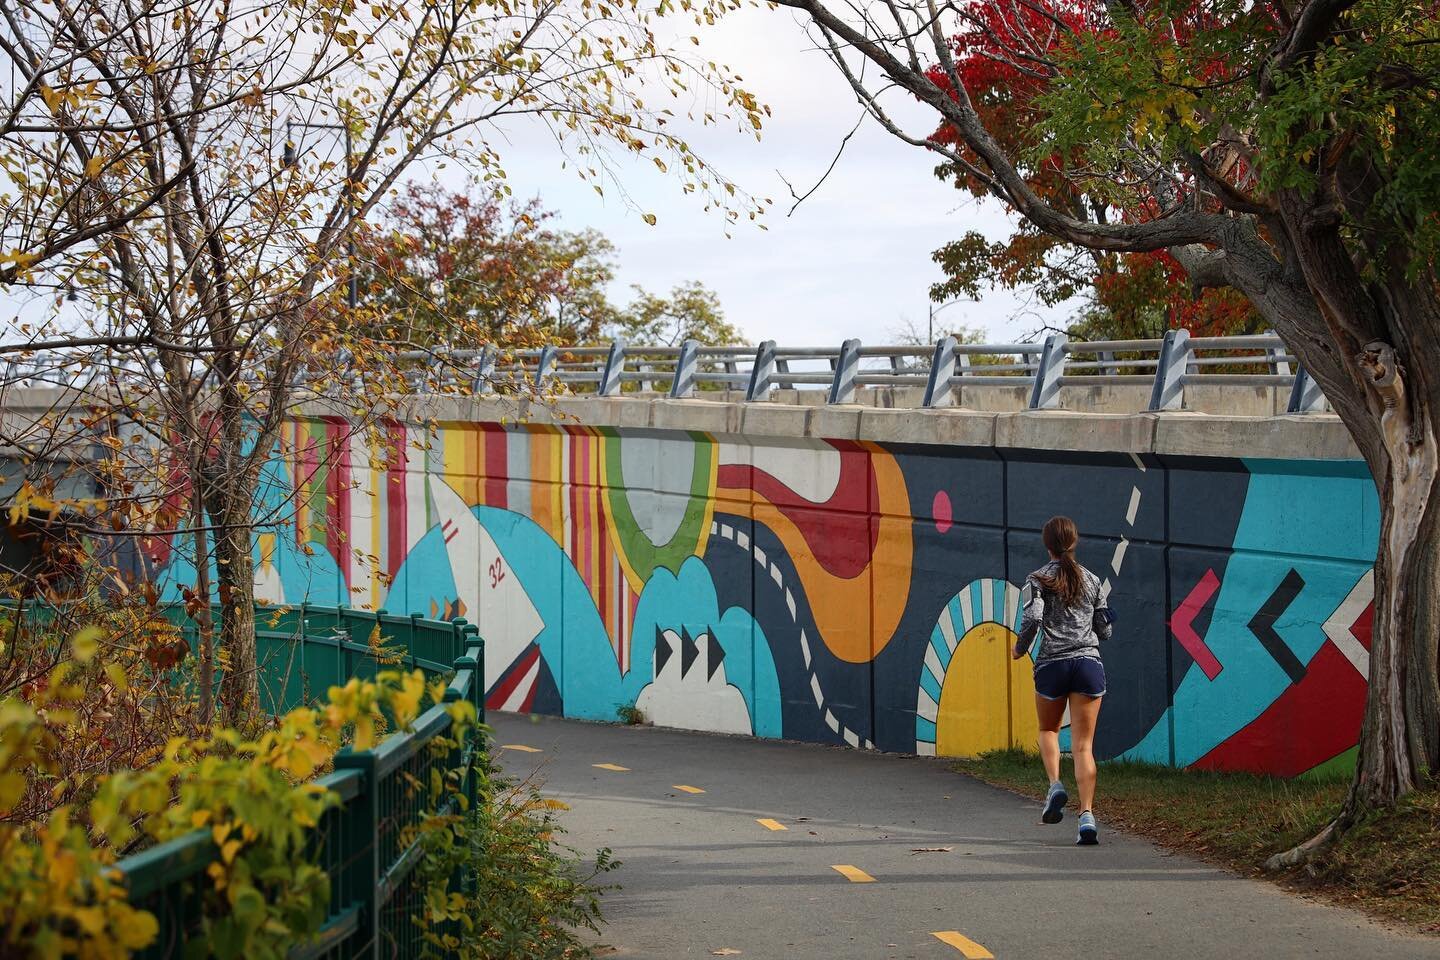 Patterned Path  @silvialopezchavez #patternedbehavior #muralpainting #publicart #charlesriveresplanade #bikepath @now_and_there @esplanadeinboston